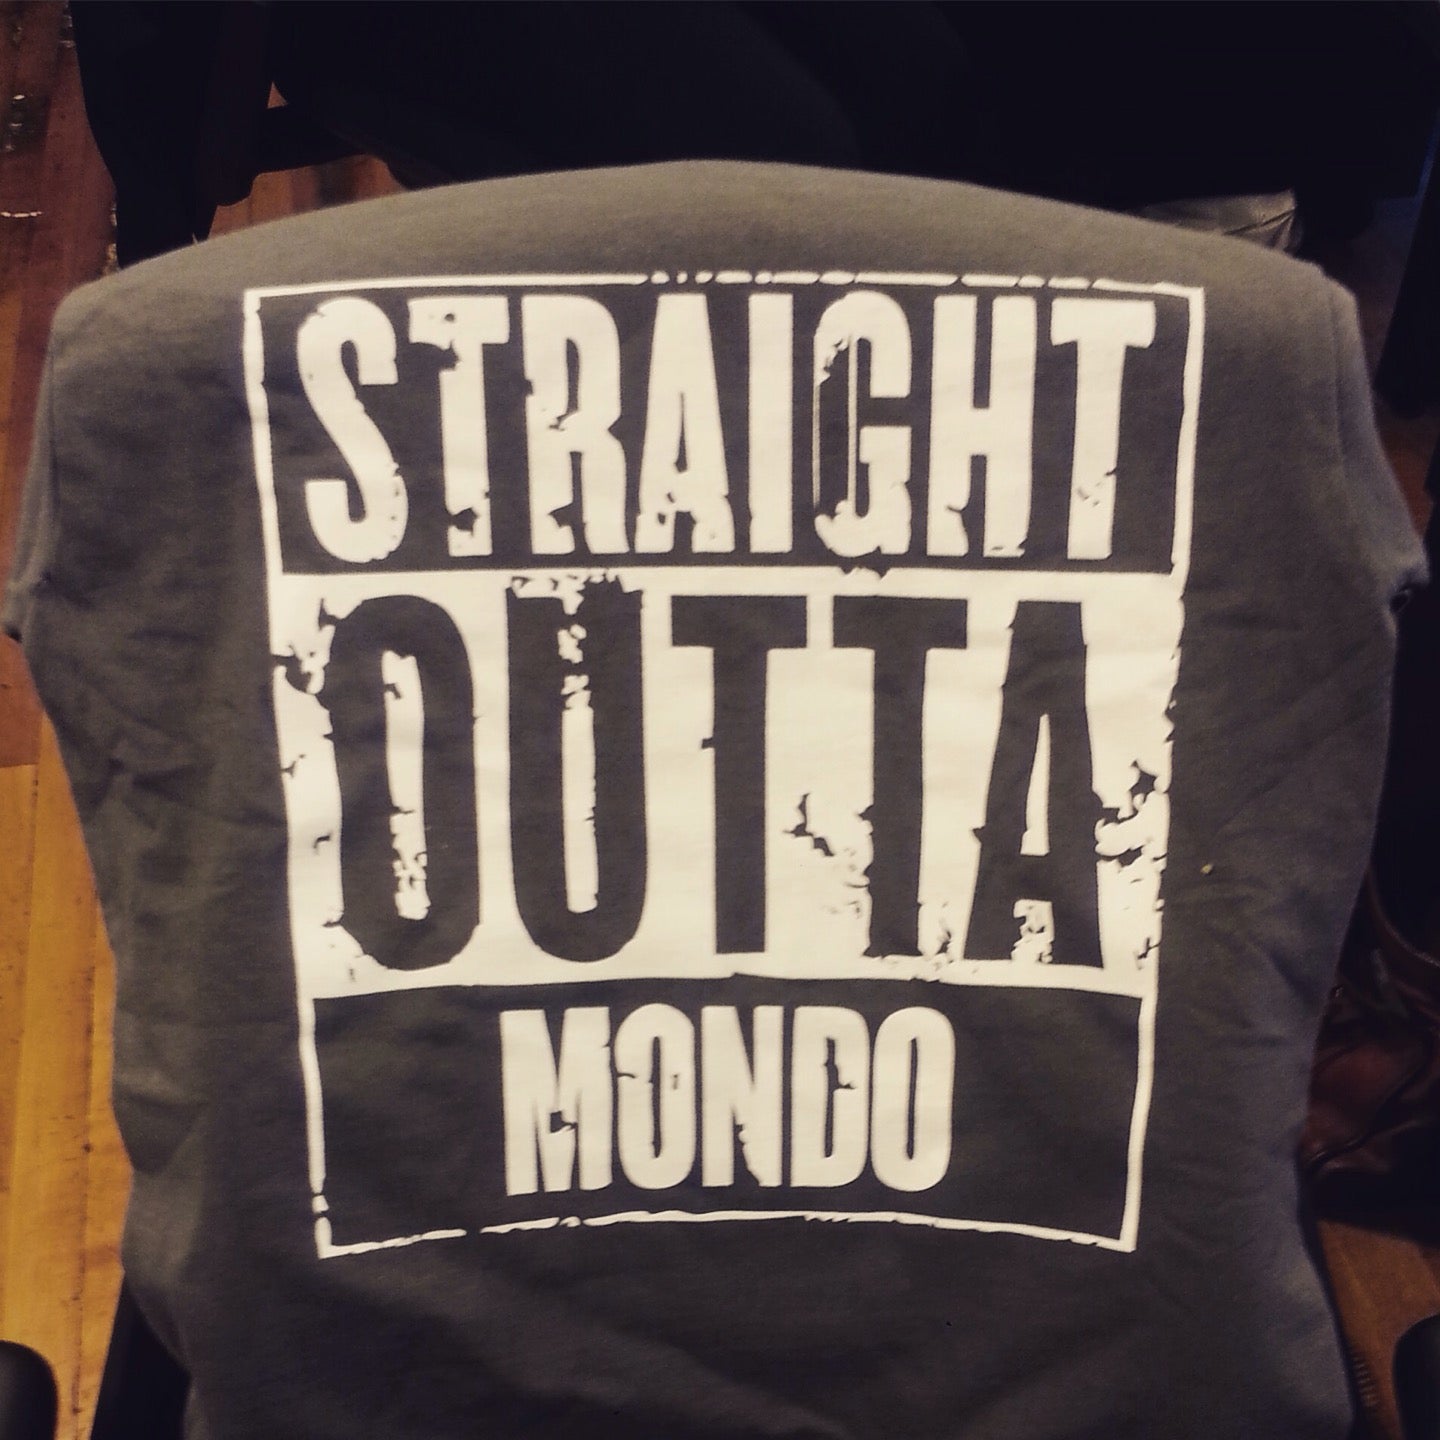 Mondo (@mondo_agents) • Instagram photos and videos